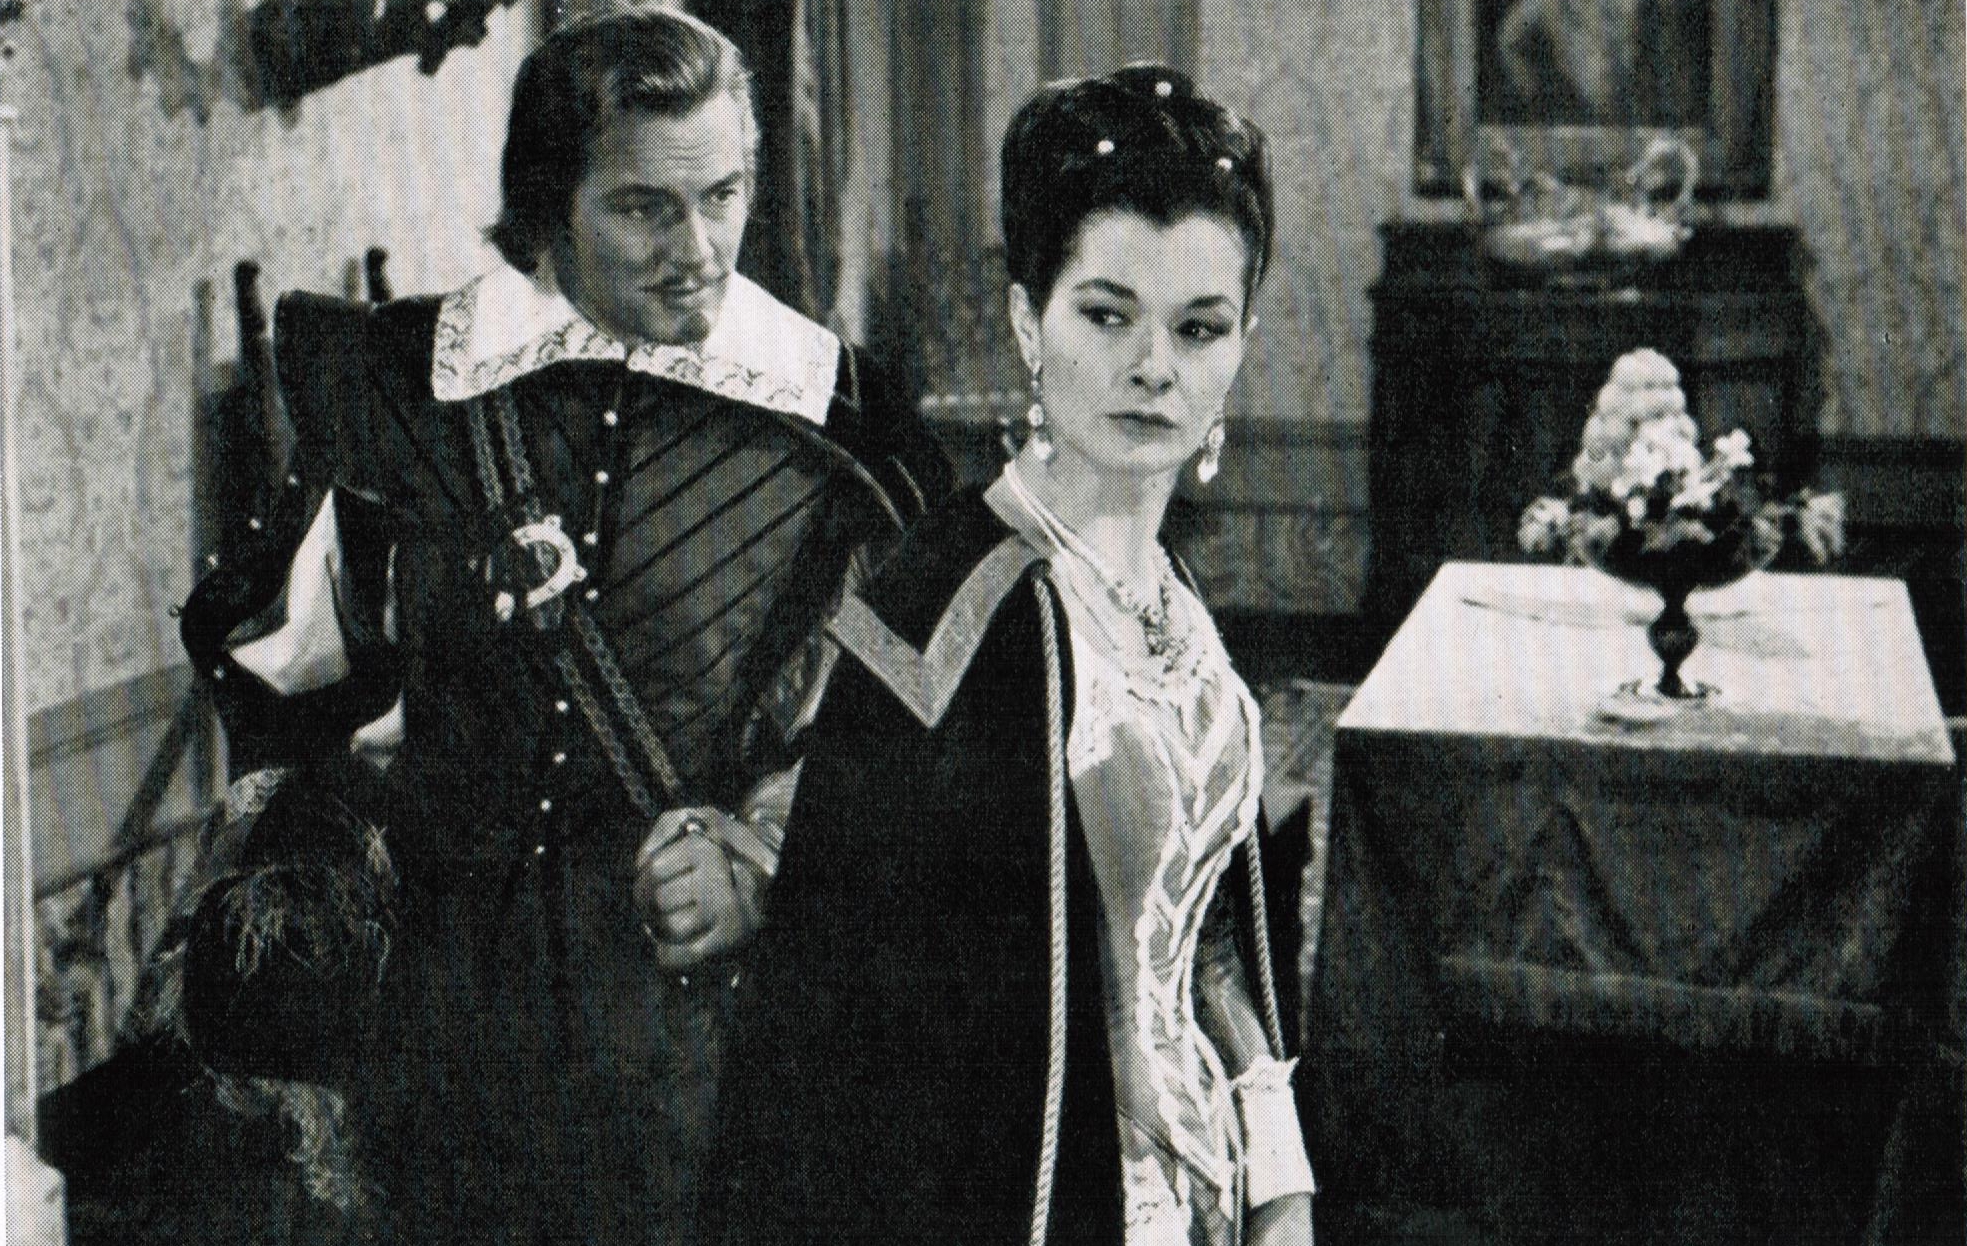 D'Artagnan contro i 3 moschettieri (1963) Screenshot 1 